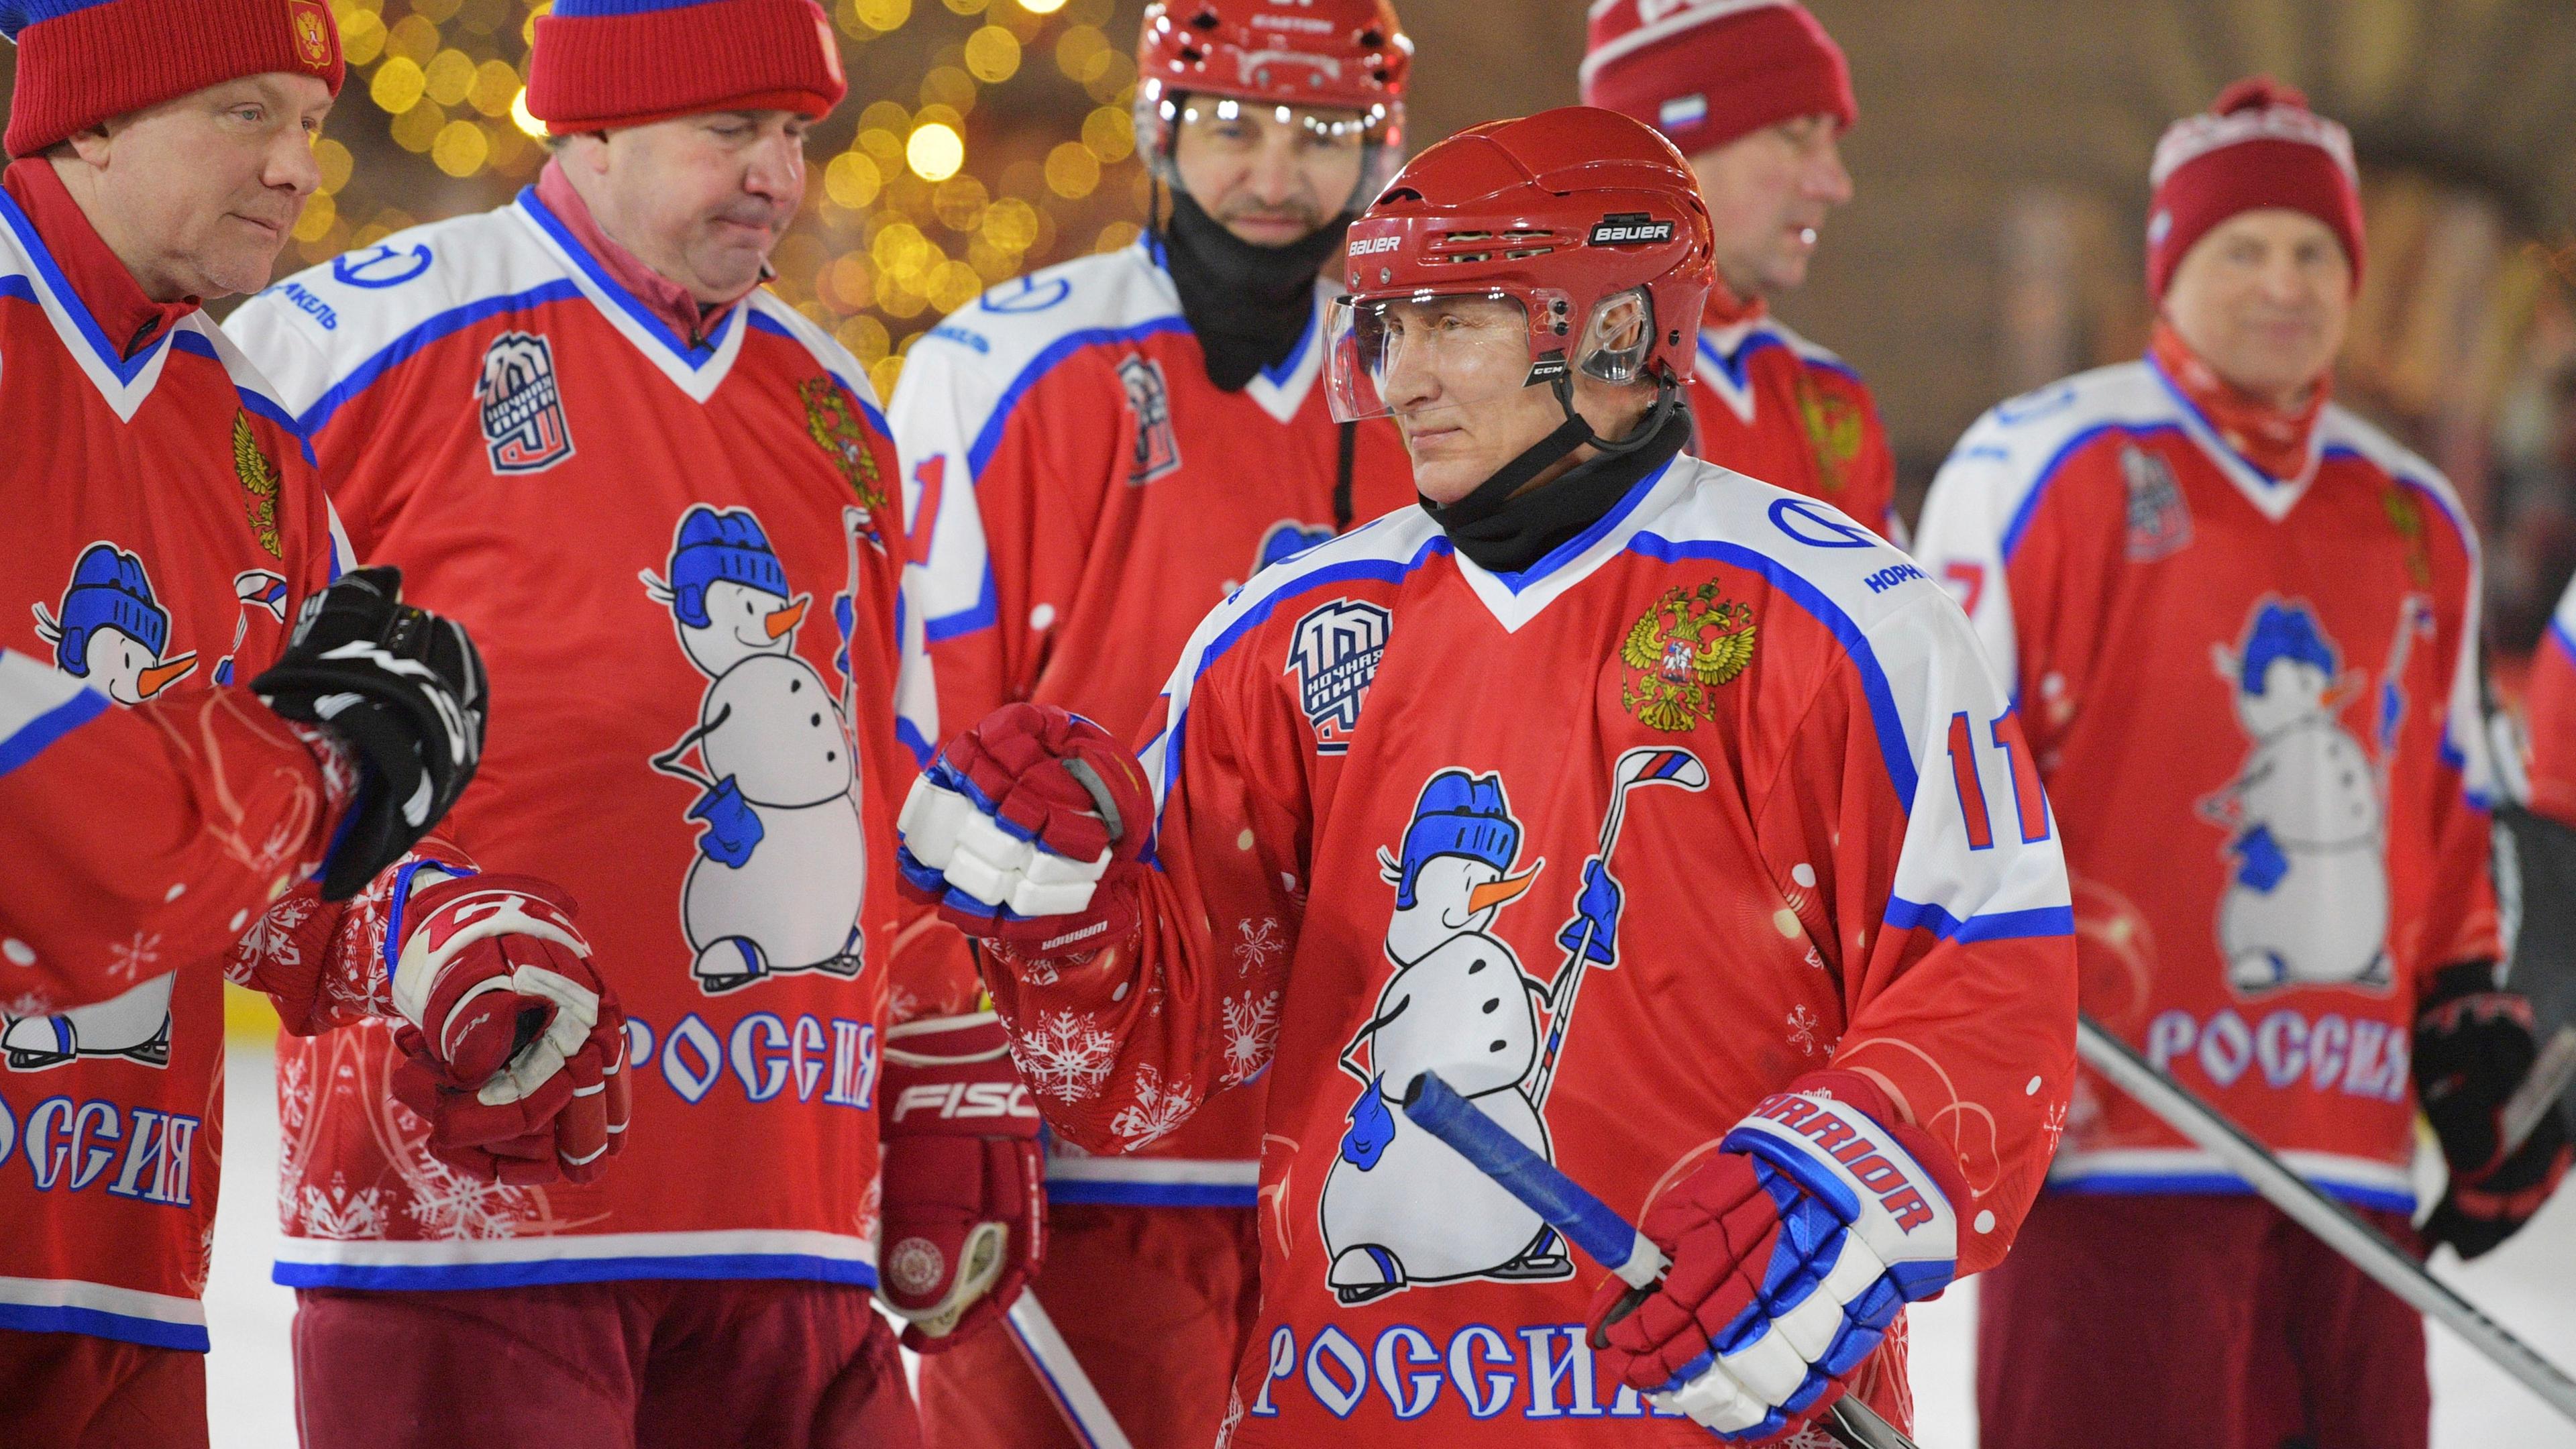 Wladimir Putin beim Eishockey im Dezember 2019